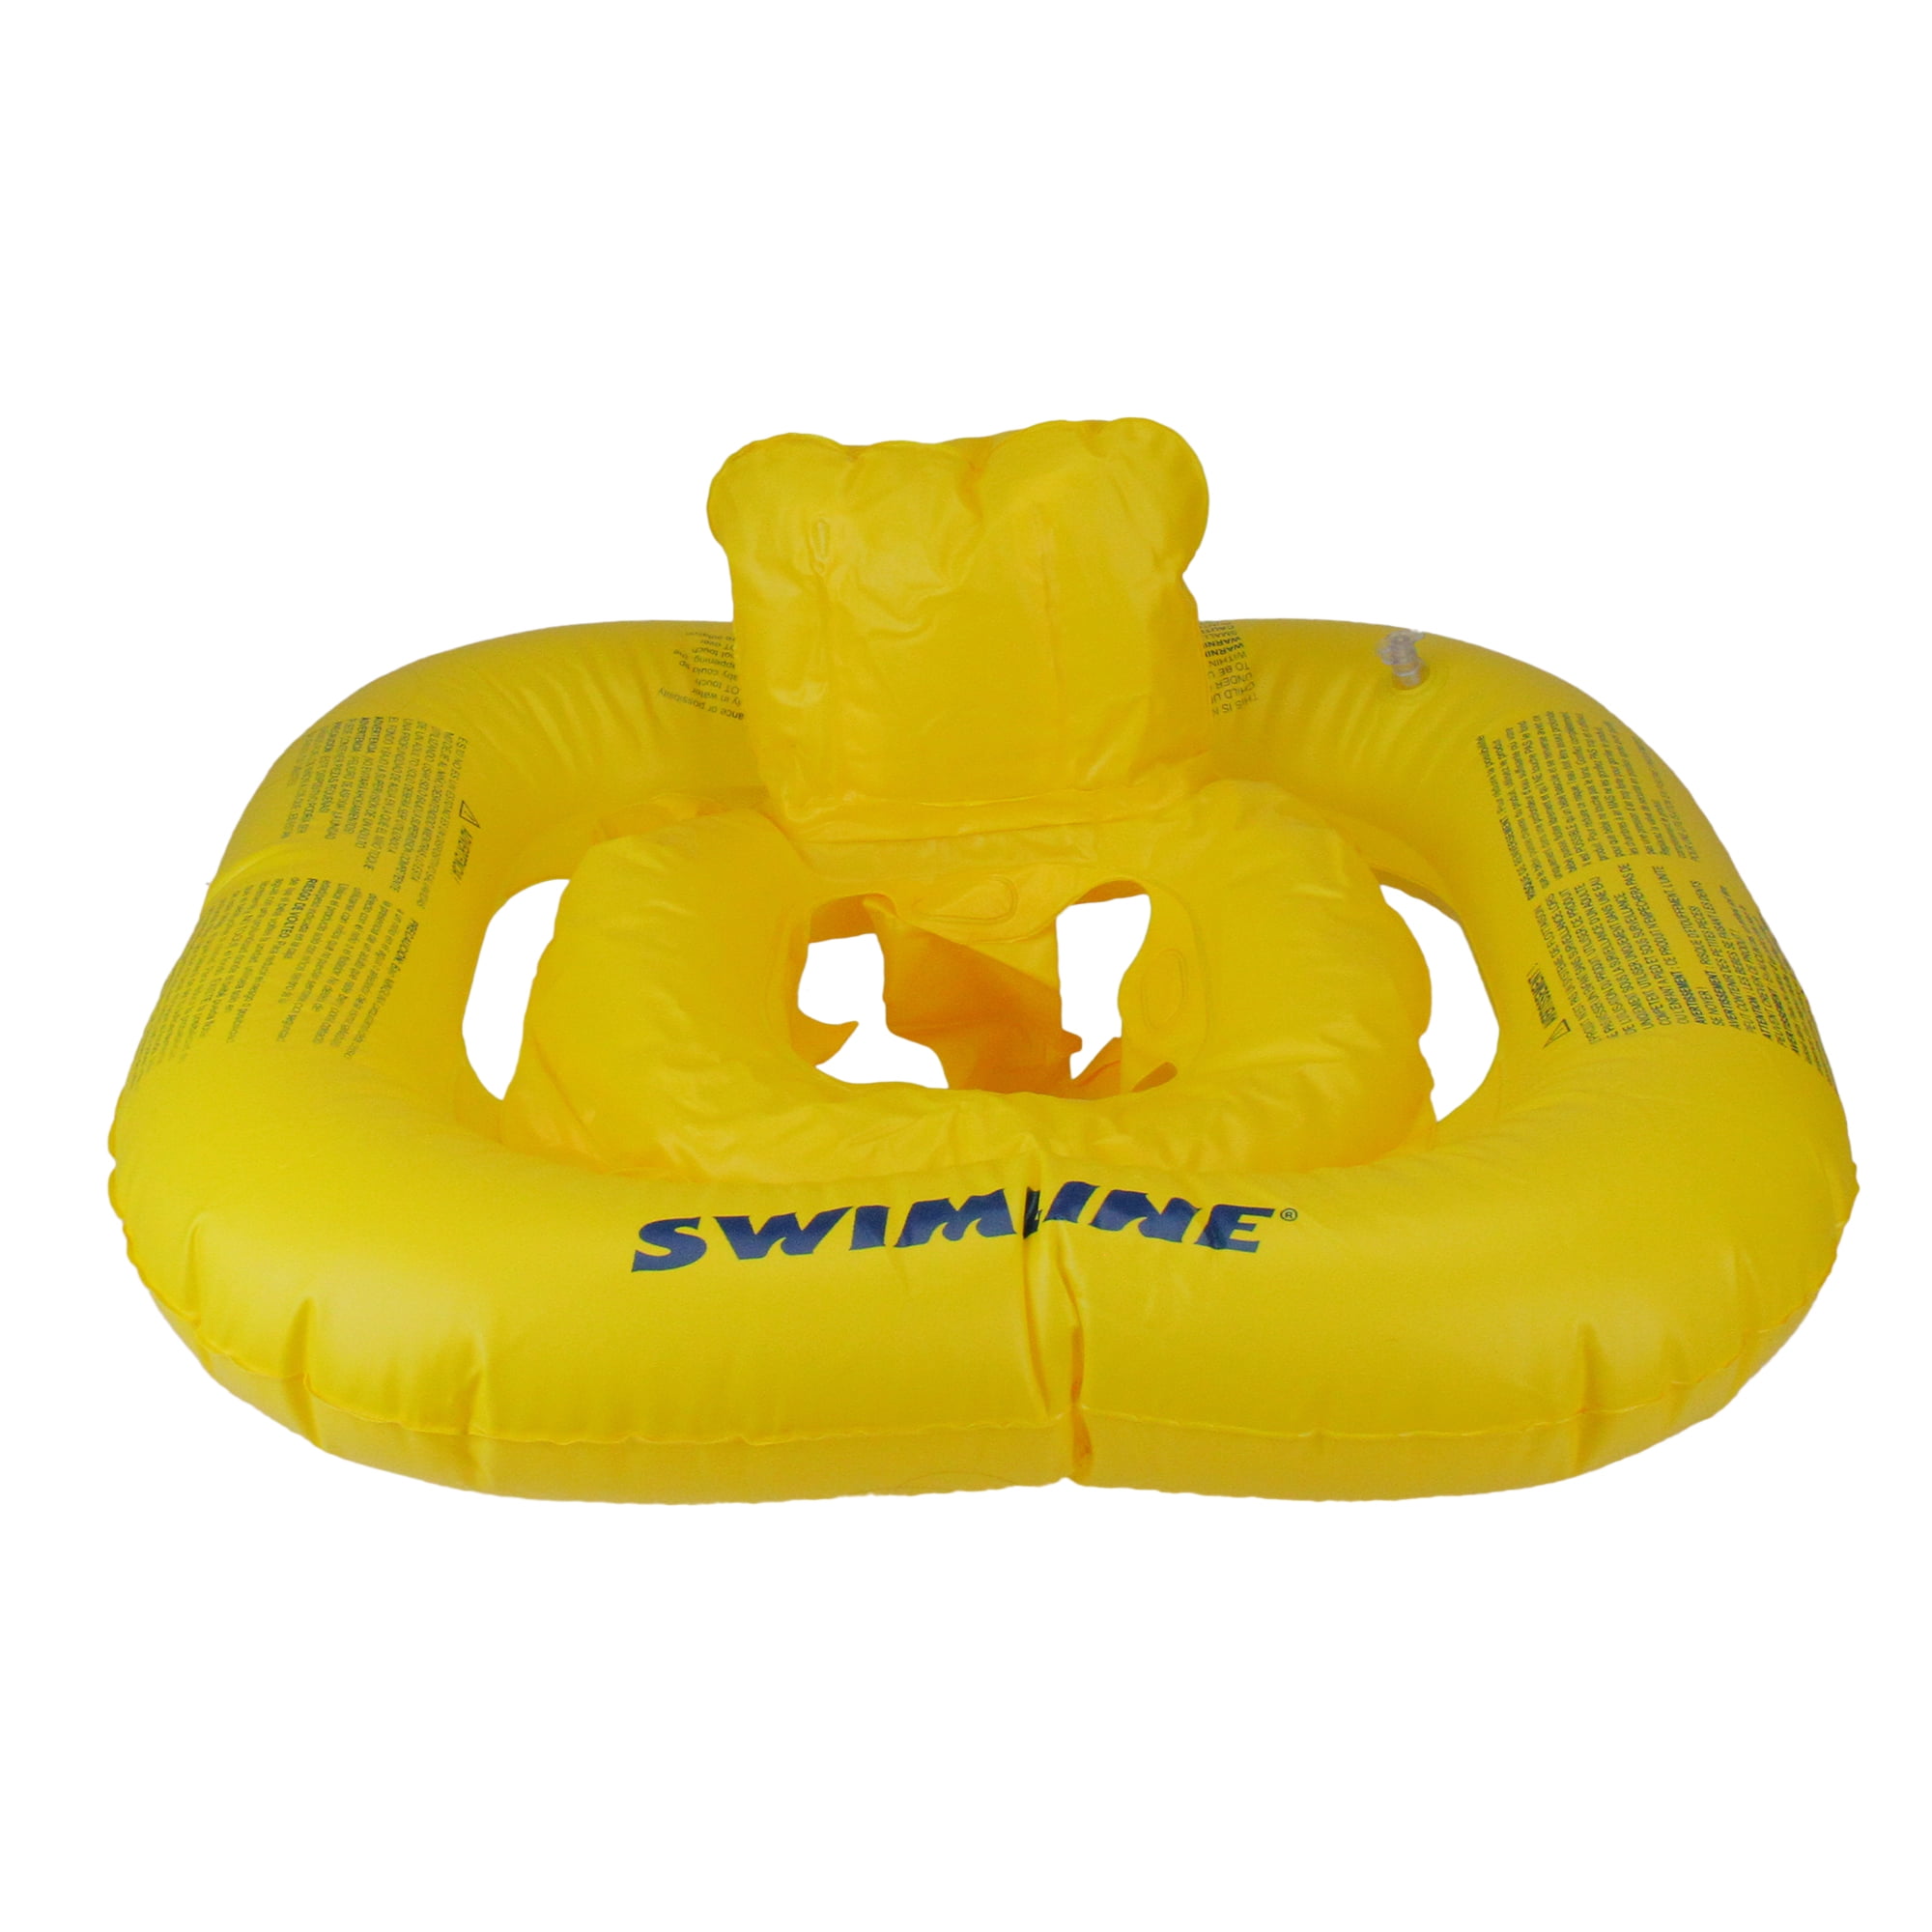 Swimline Set of 4 Floating Pool Rings for sale online